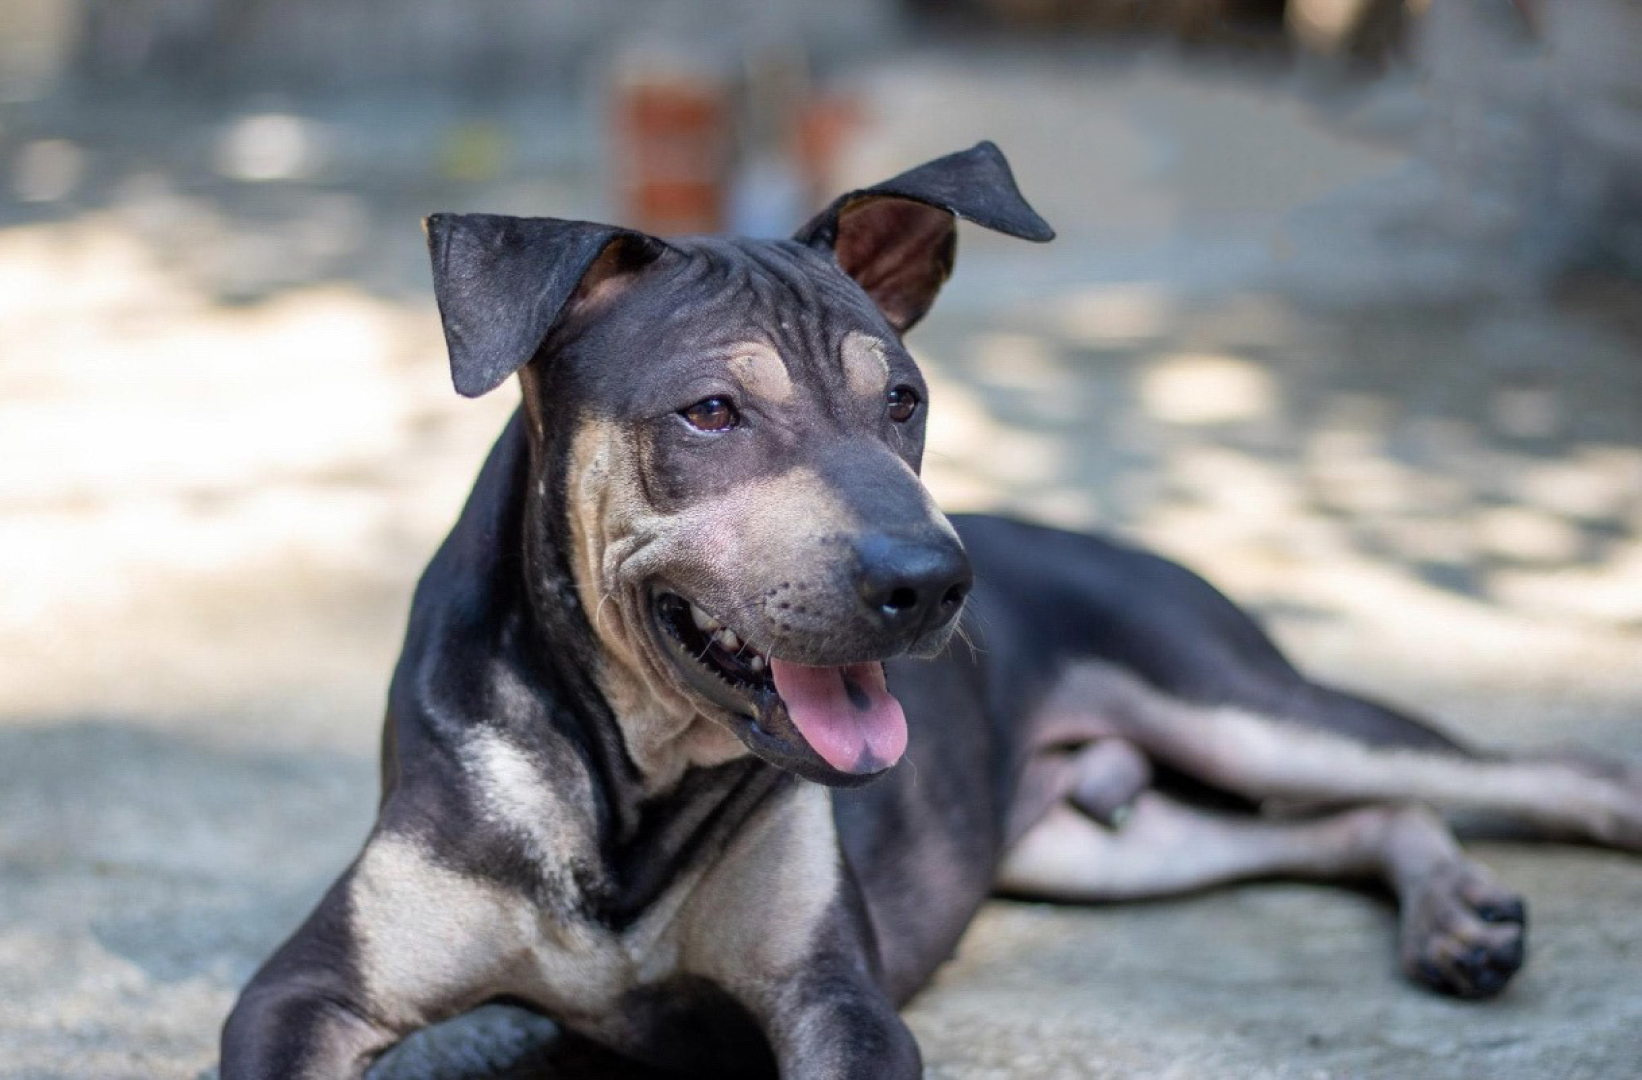 Pack, a dog for adoption at MASDAW / Macao pet adoptions